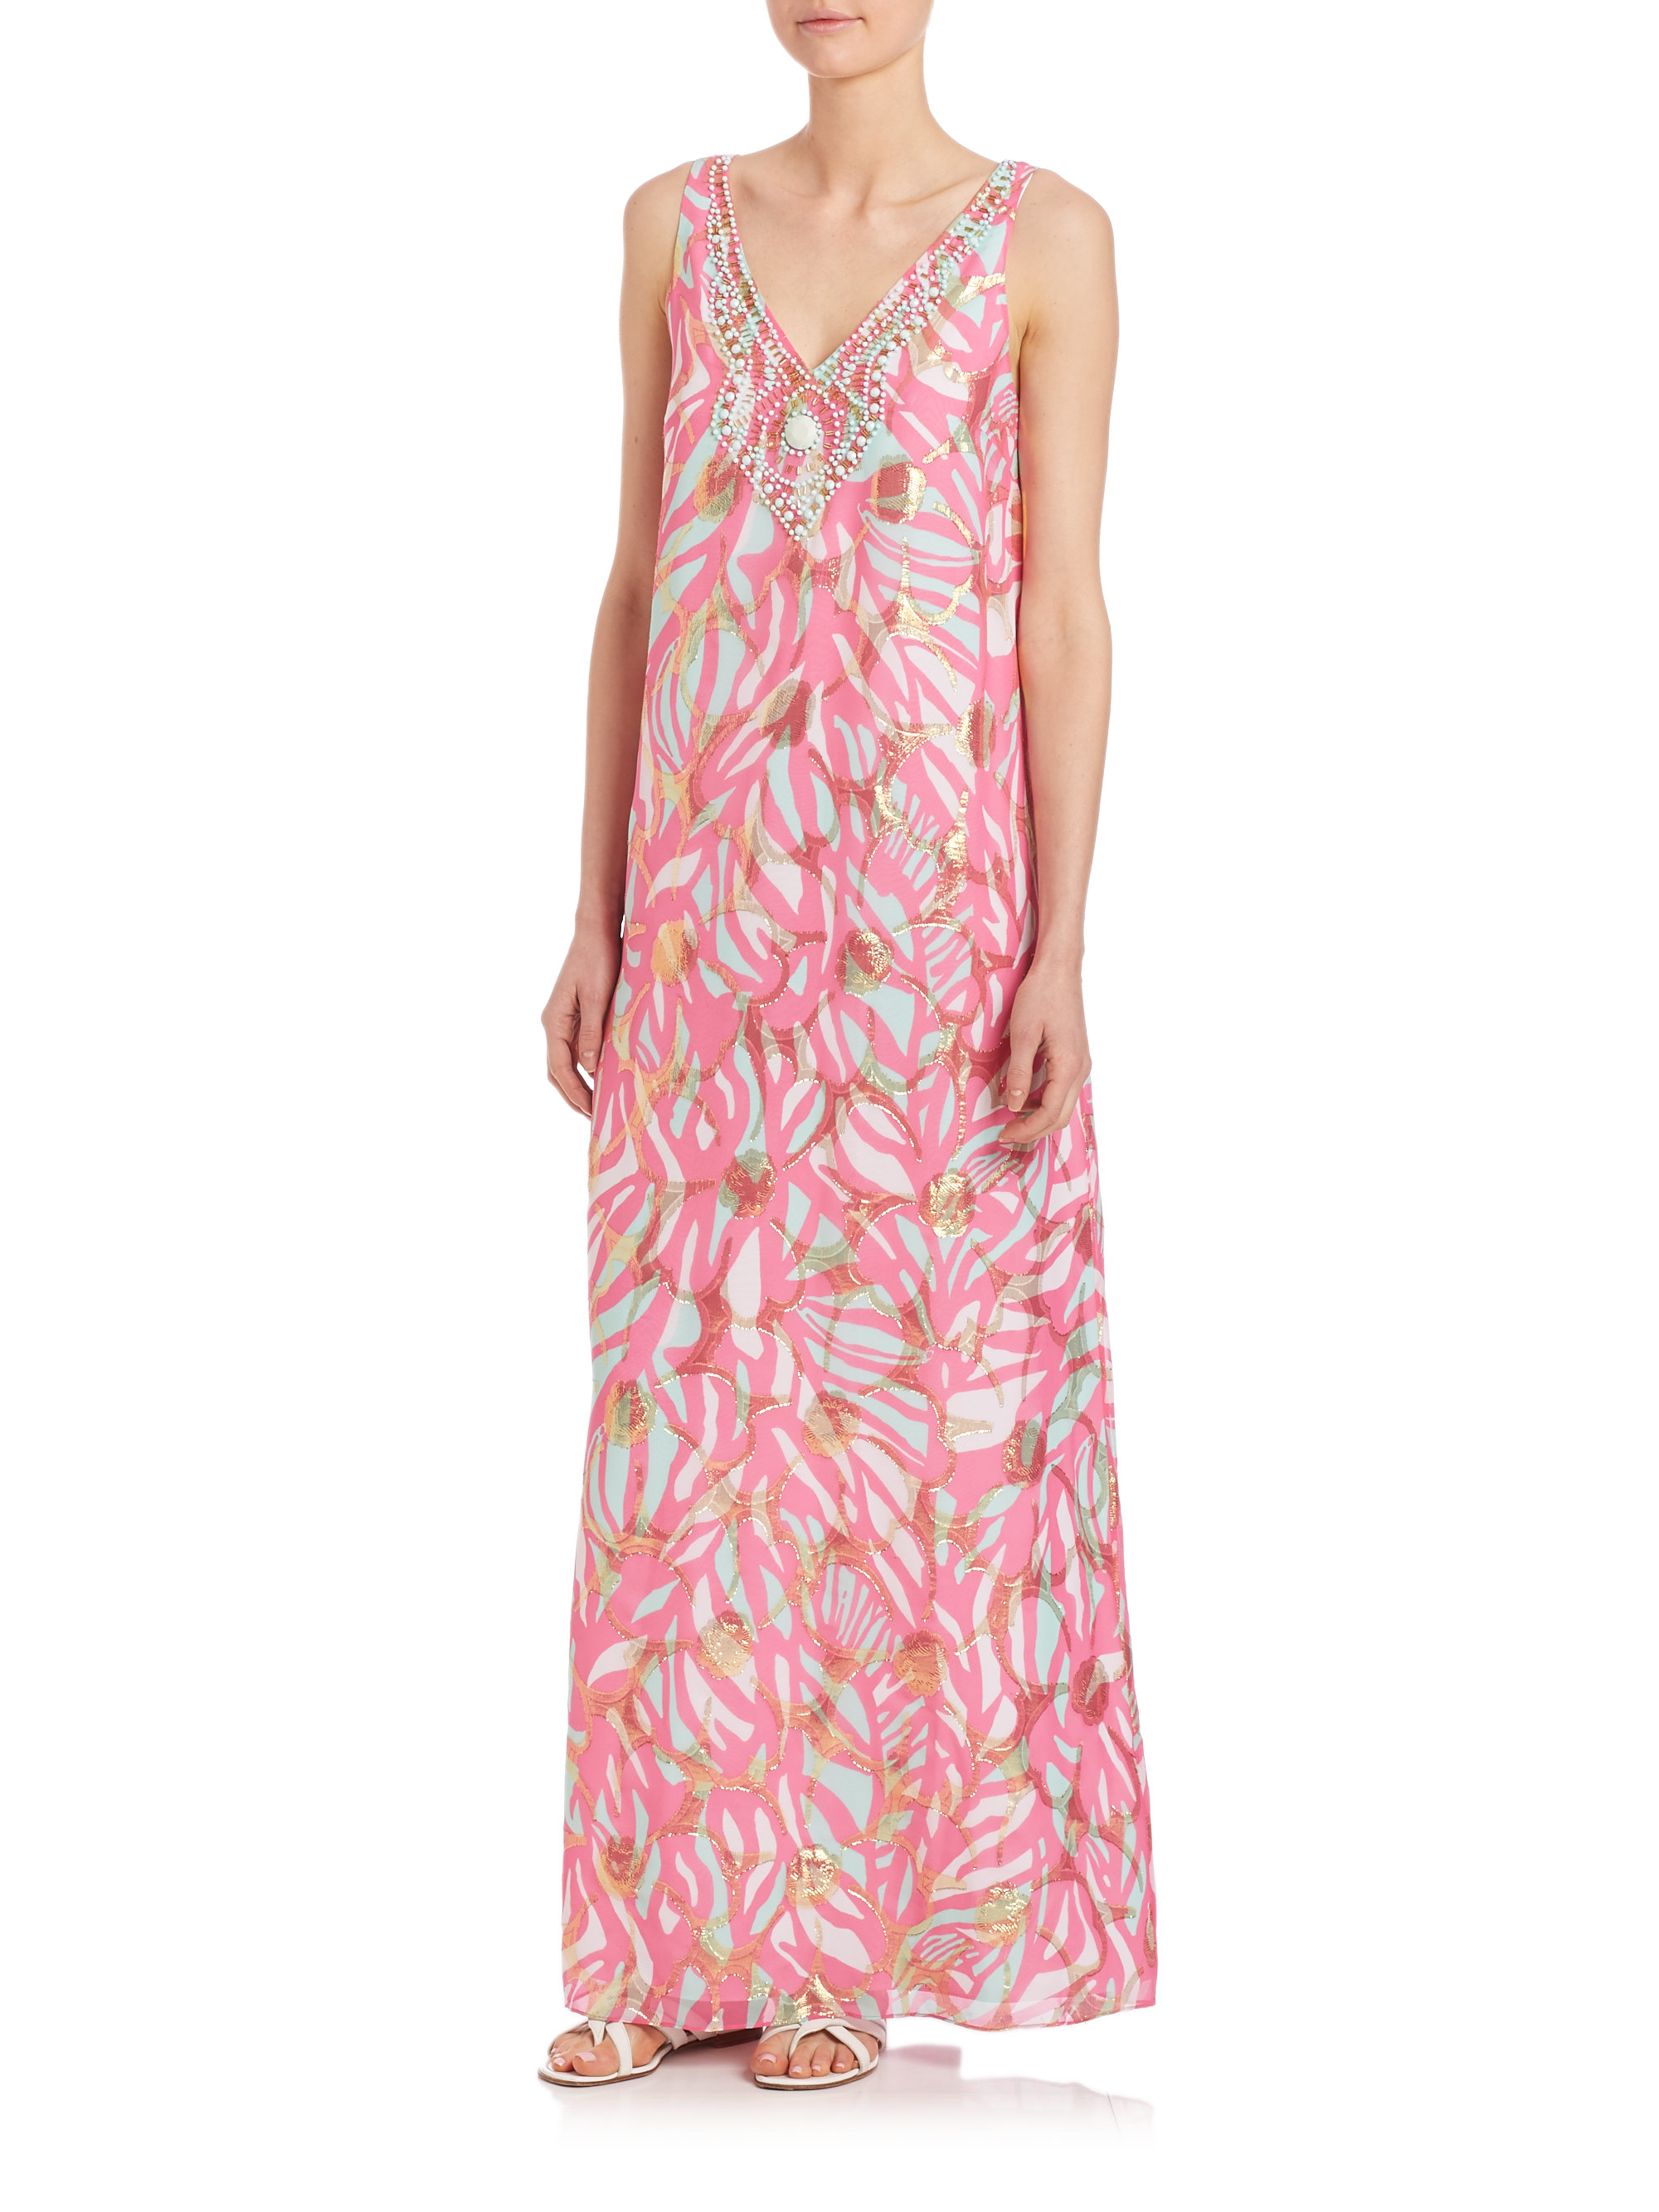 Lilly Pulitzer Mallory Metallic Silk Chiffon Maxi Dress in Pink - Lyst